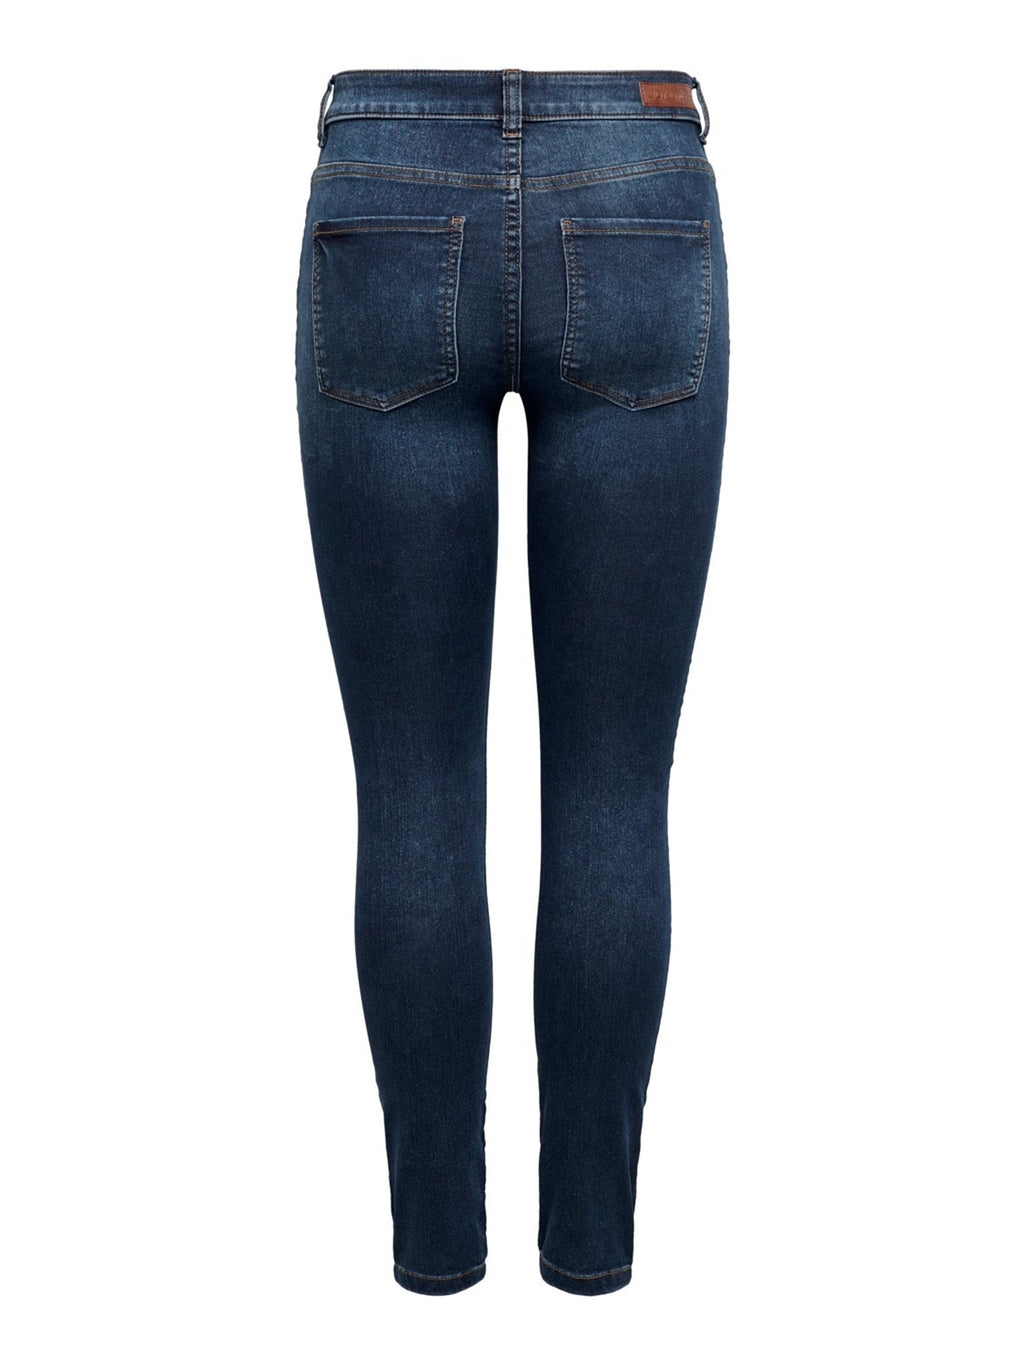 Performance Jeans - Blue Denim (Mid -Wist)